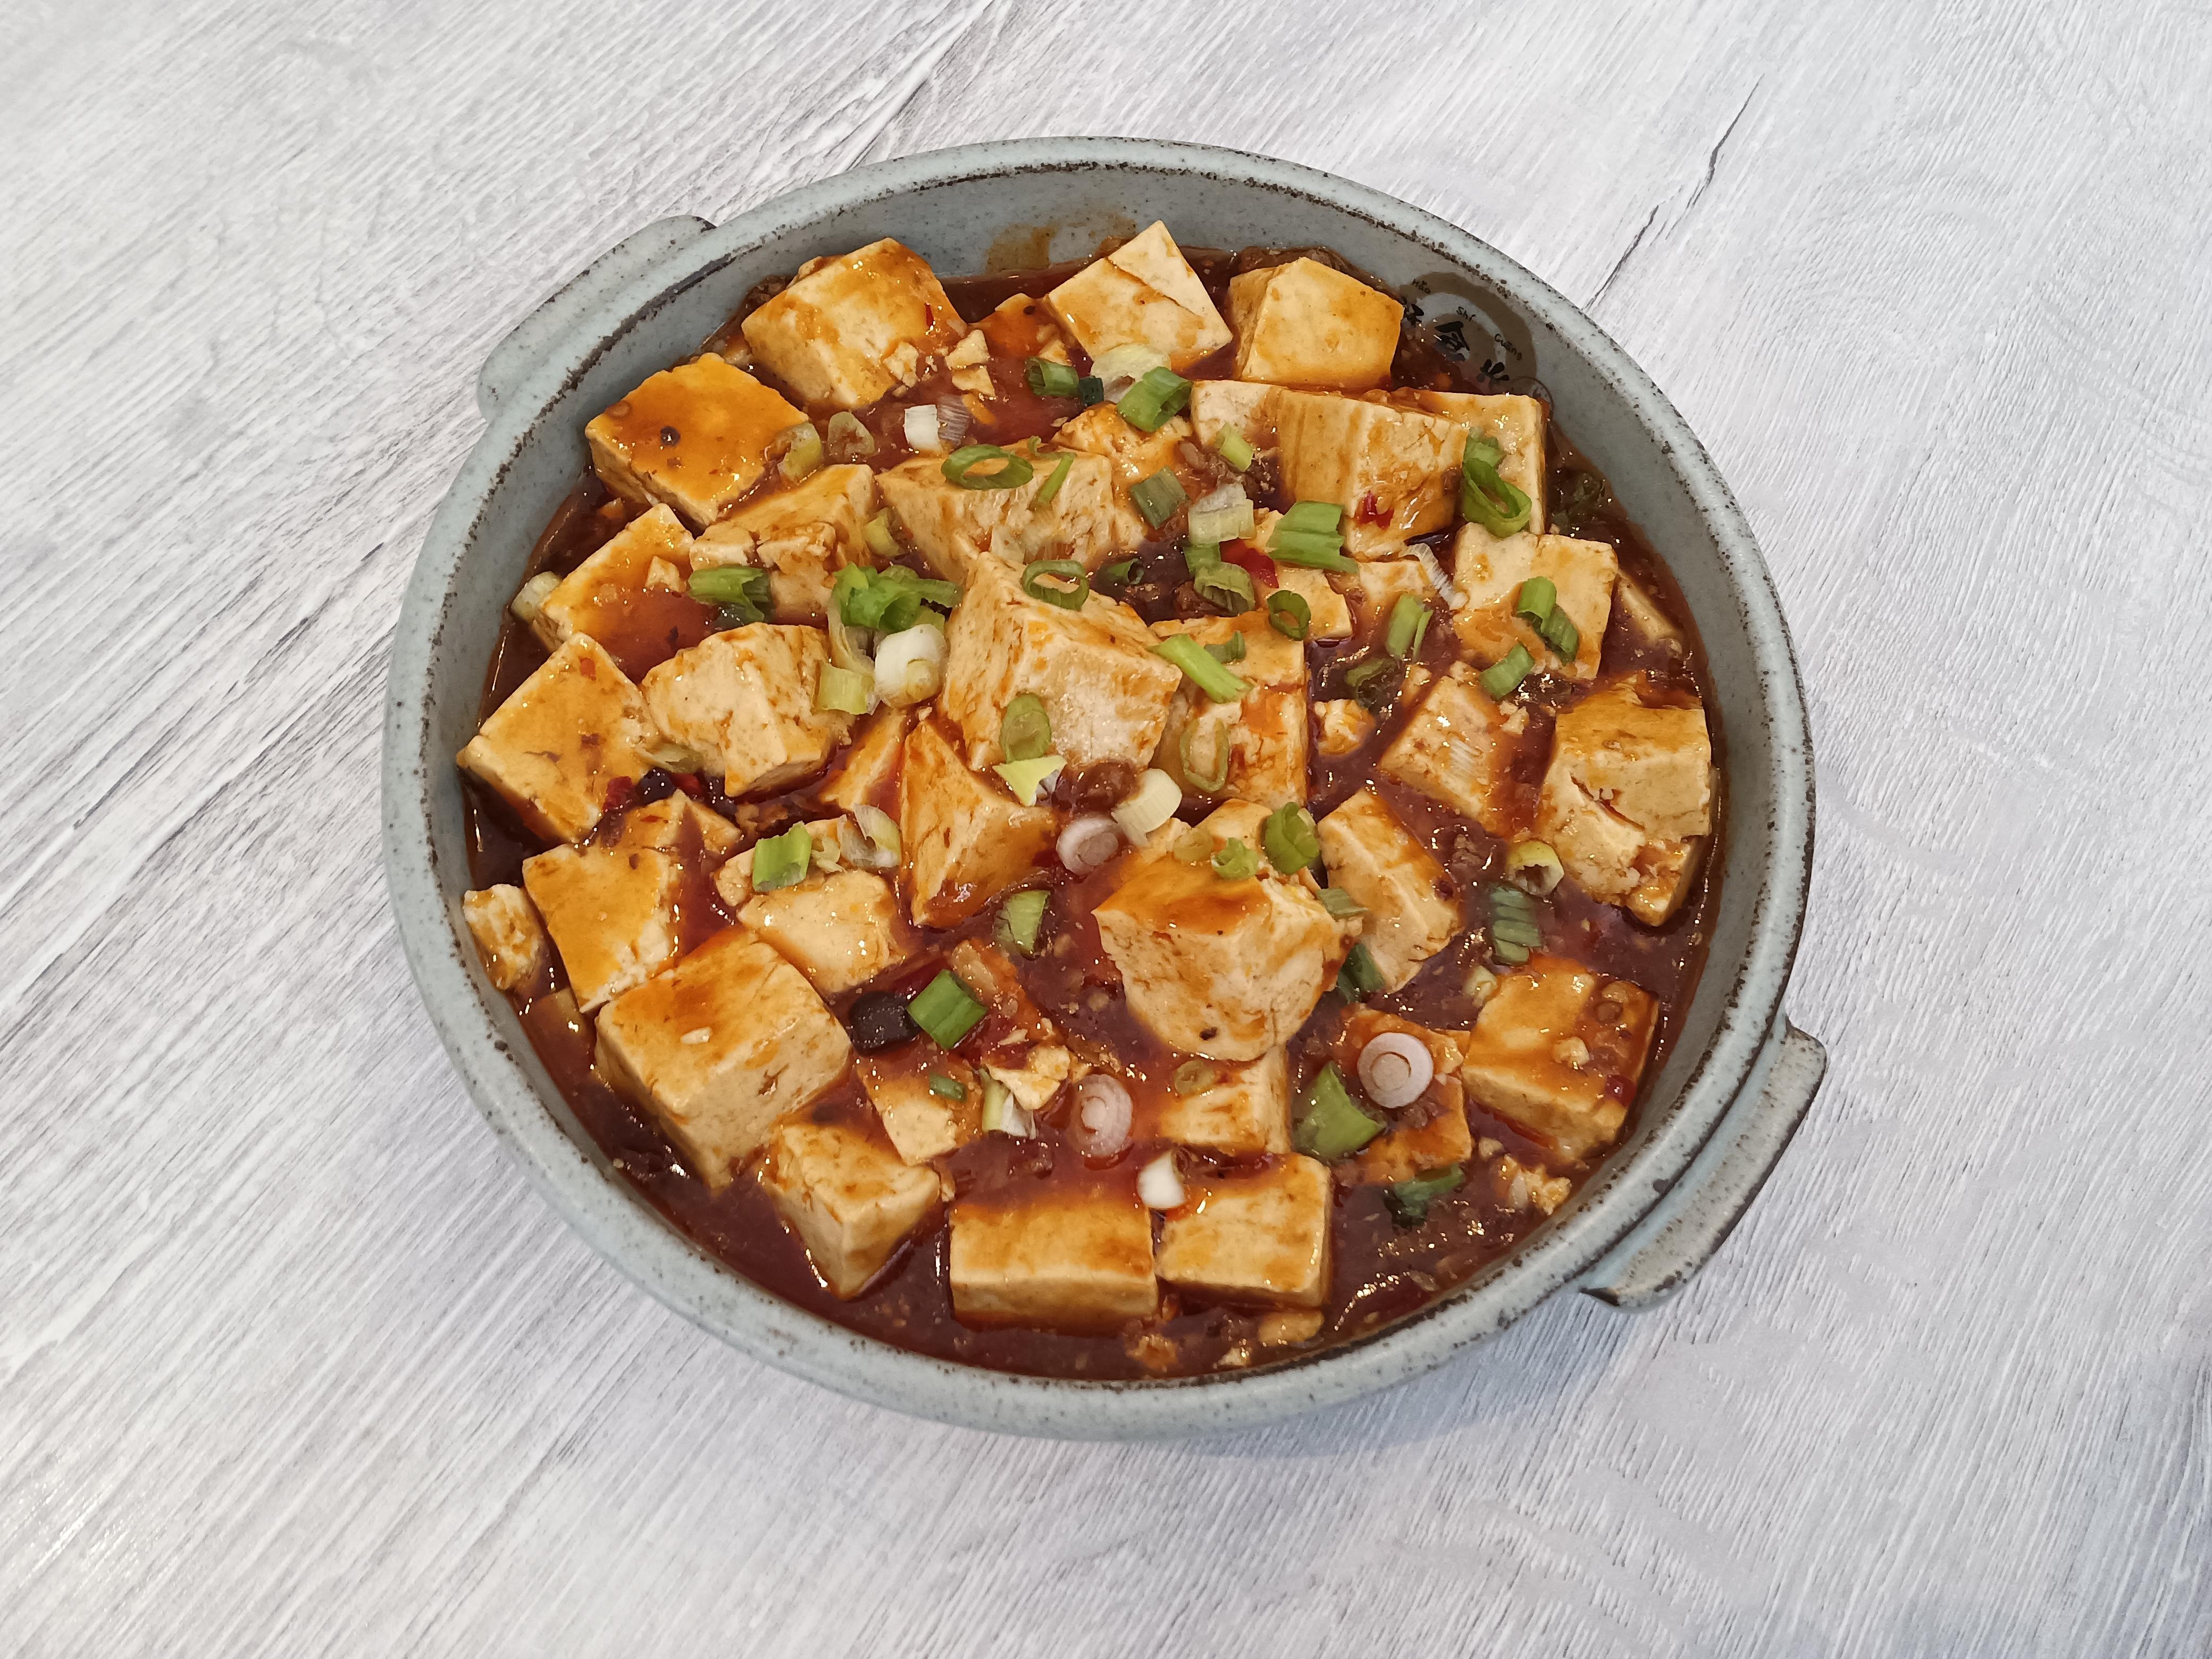 H05麻婆豆腐 Authentic Mapo Tofu